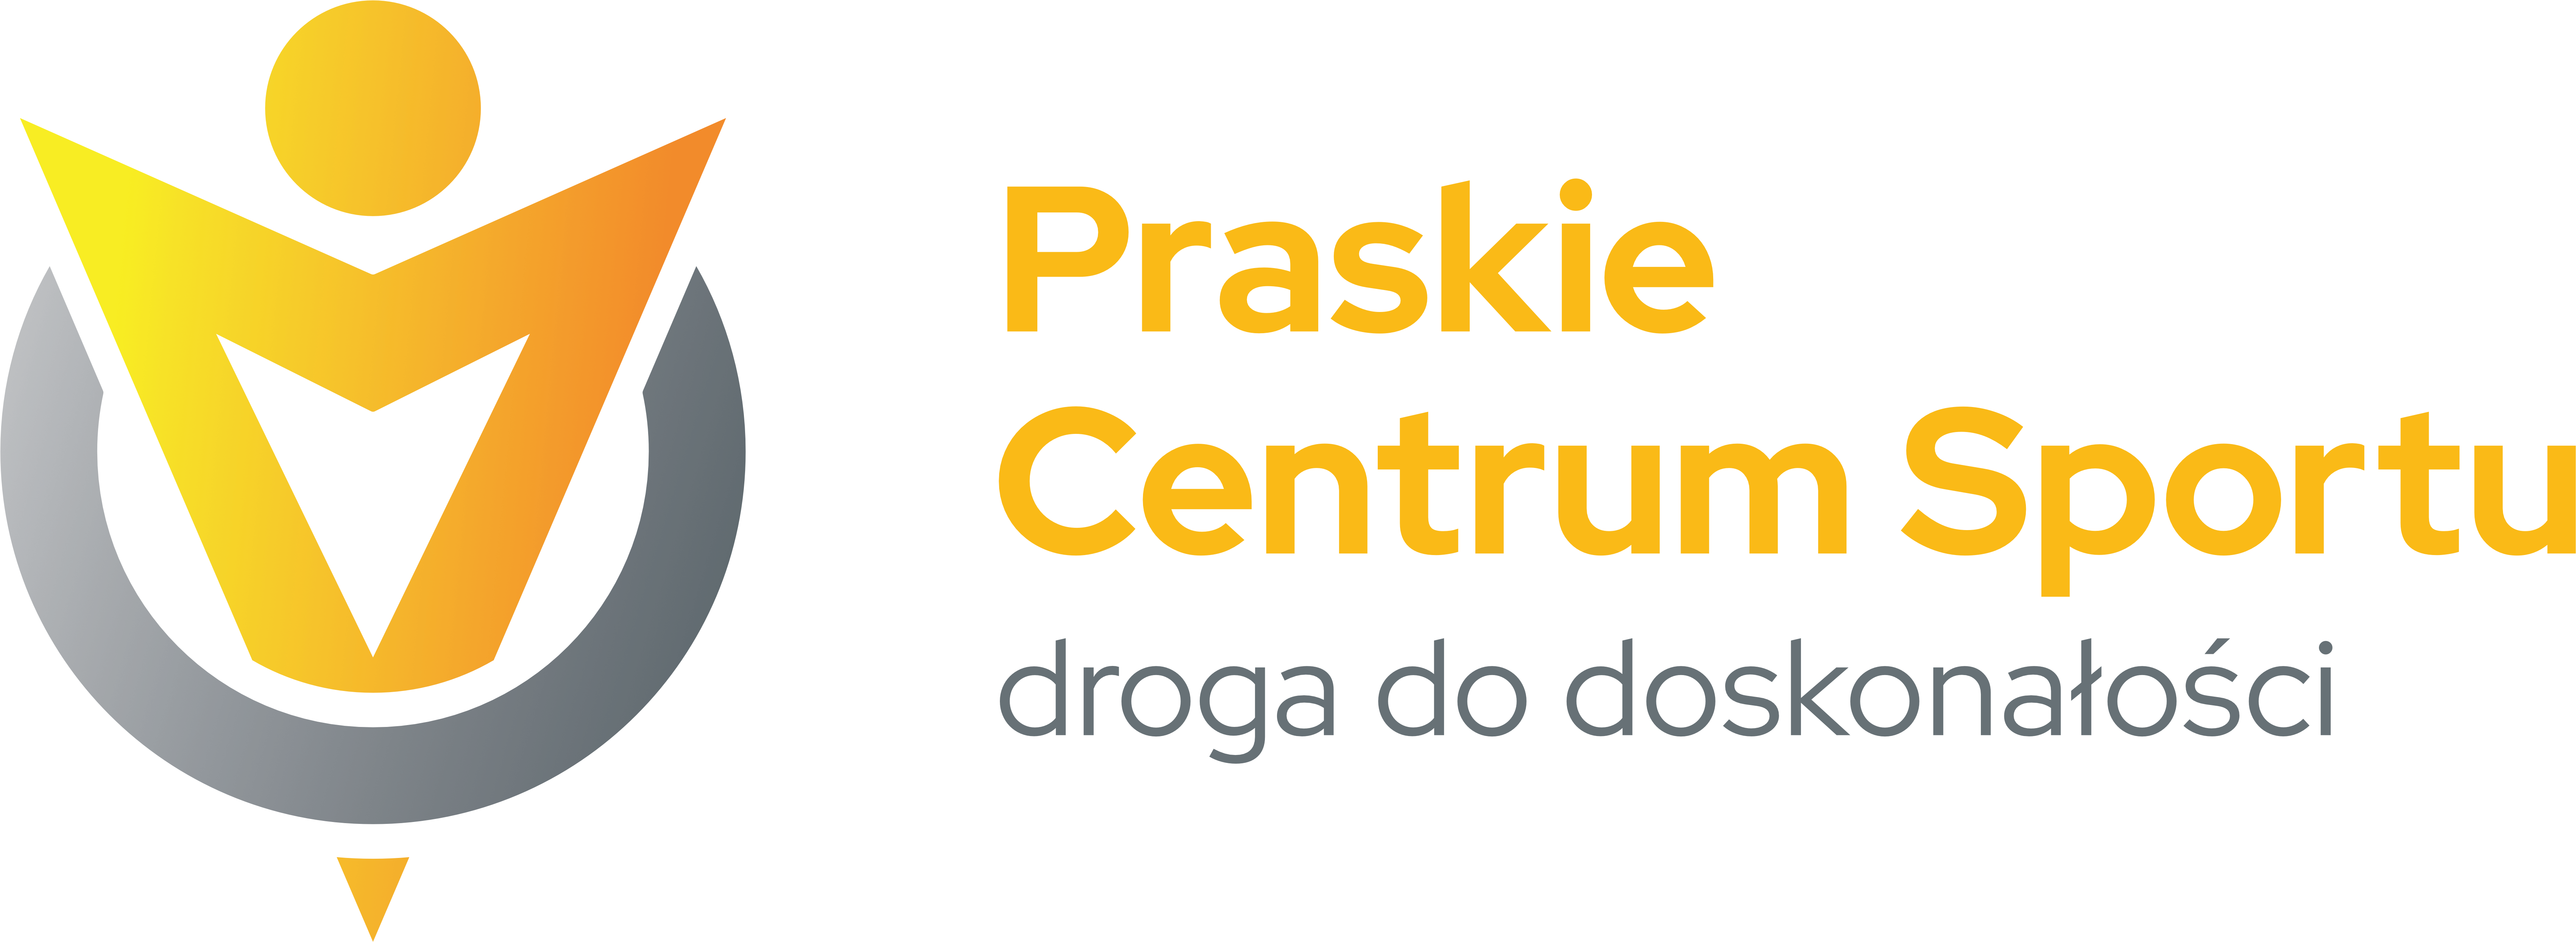 Praskie Centrum Sportu